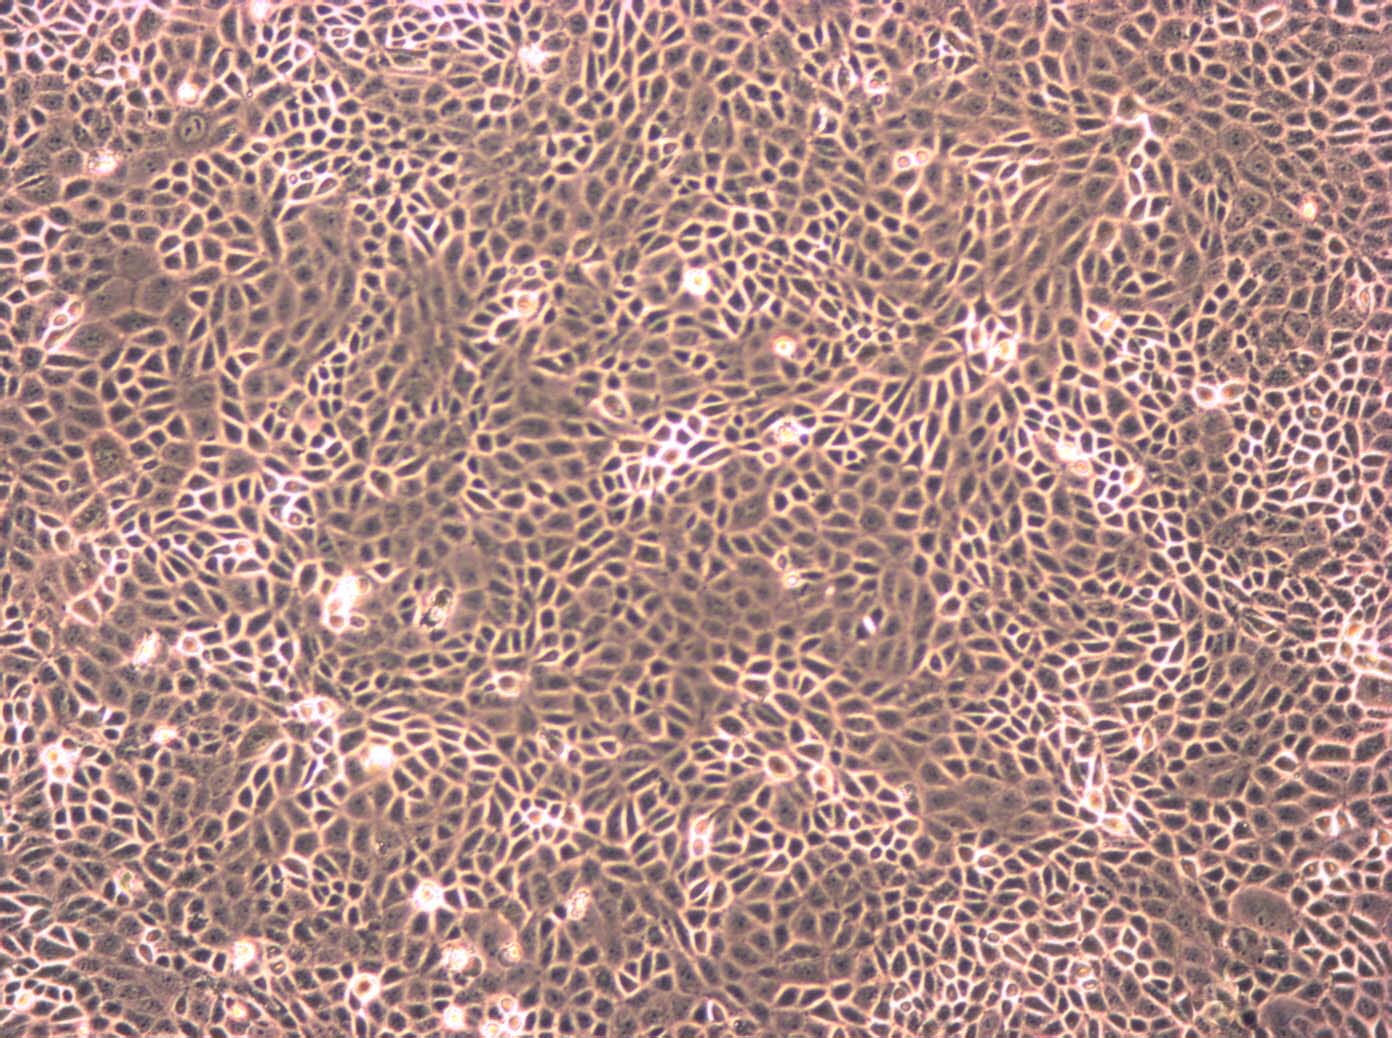 KOSC-2 Cells|人口腔鳞状癌细胞系